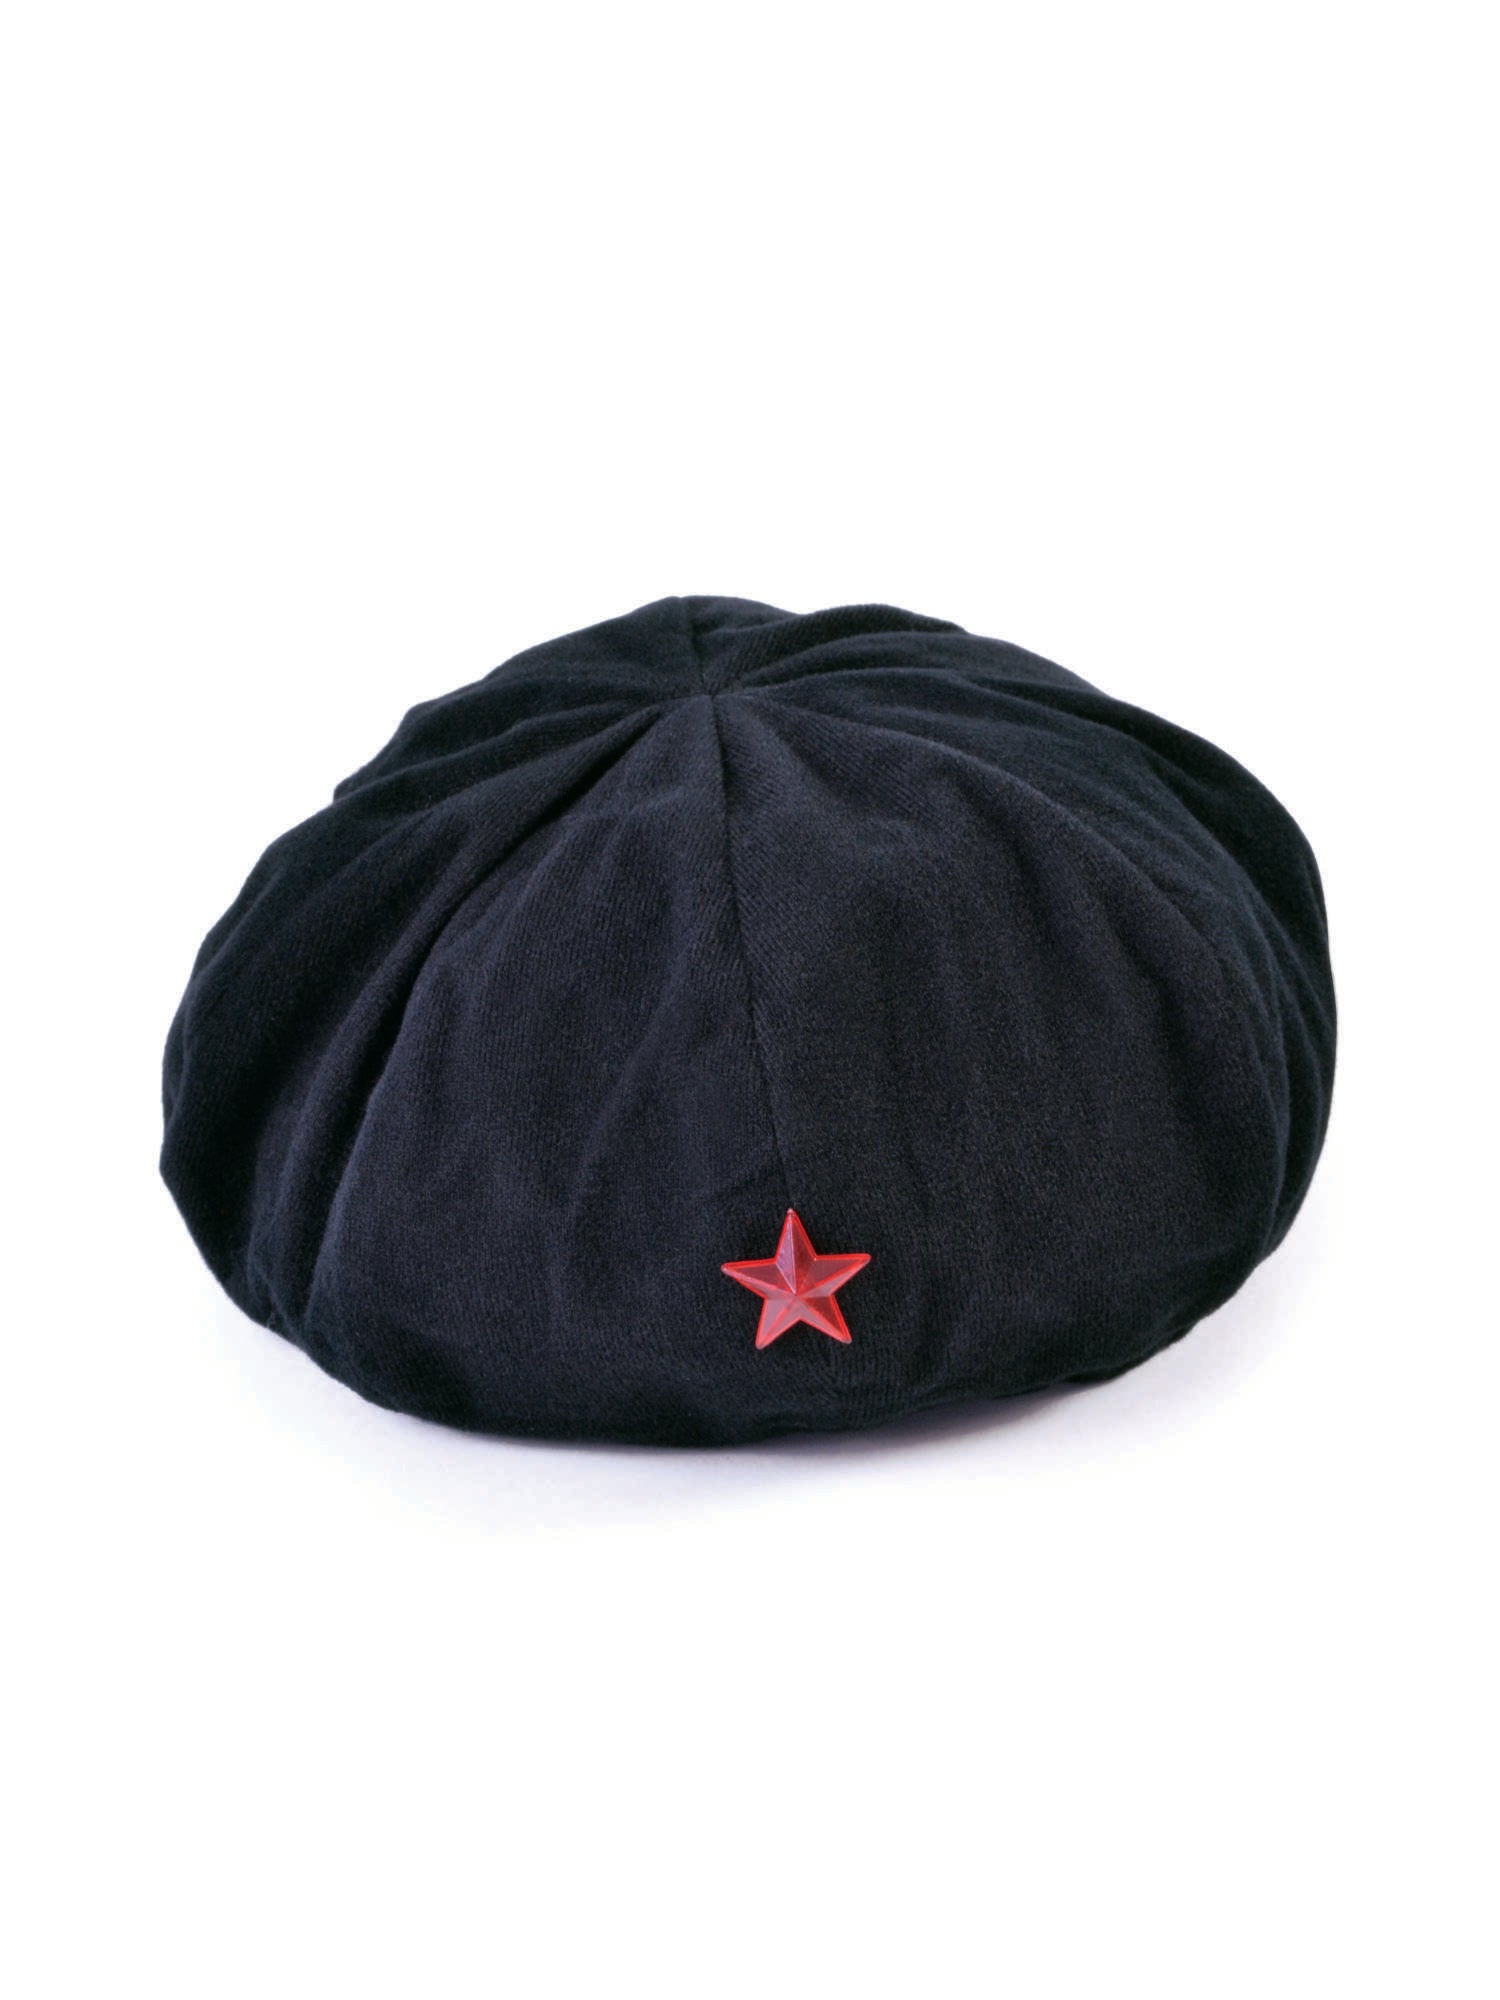 Revolutionist Hat